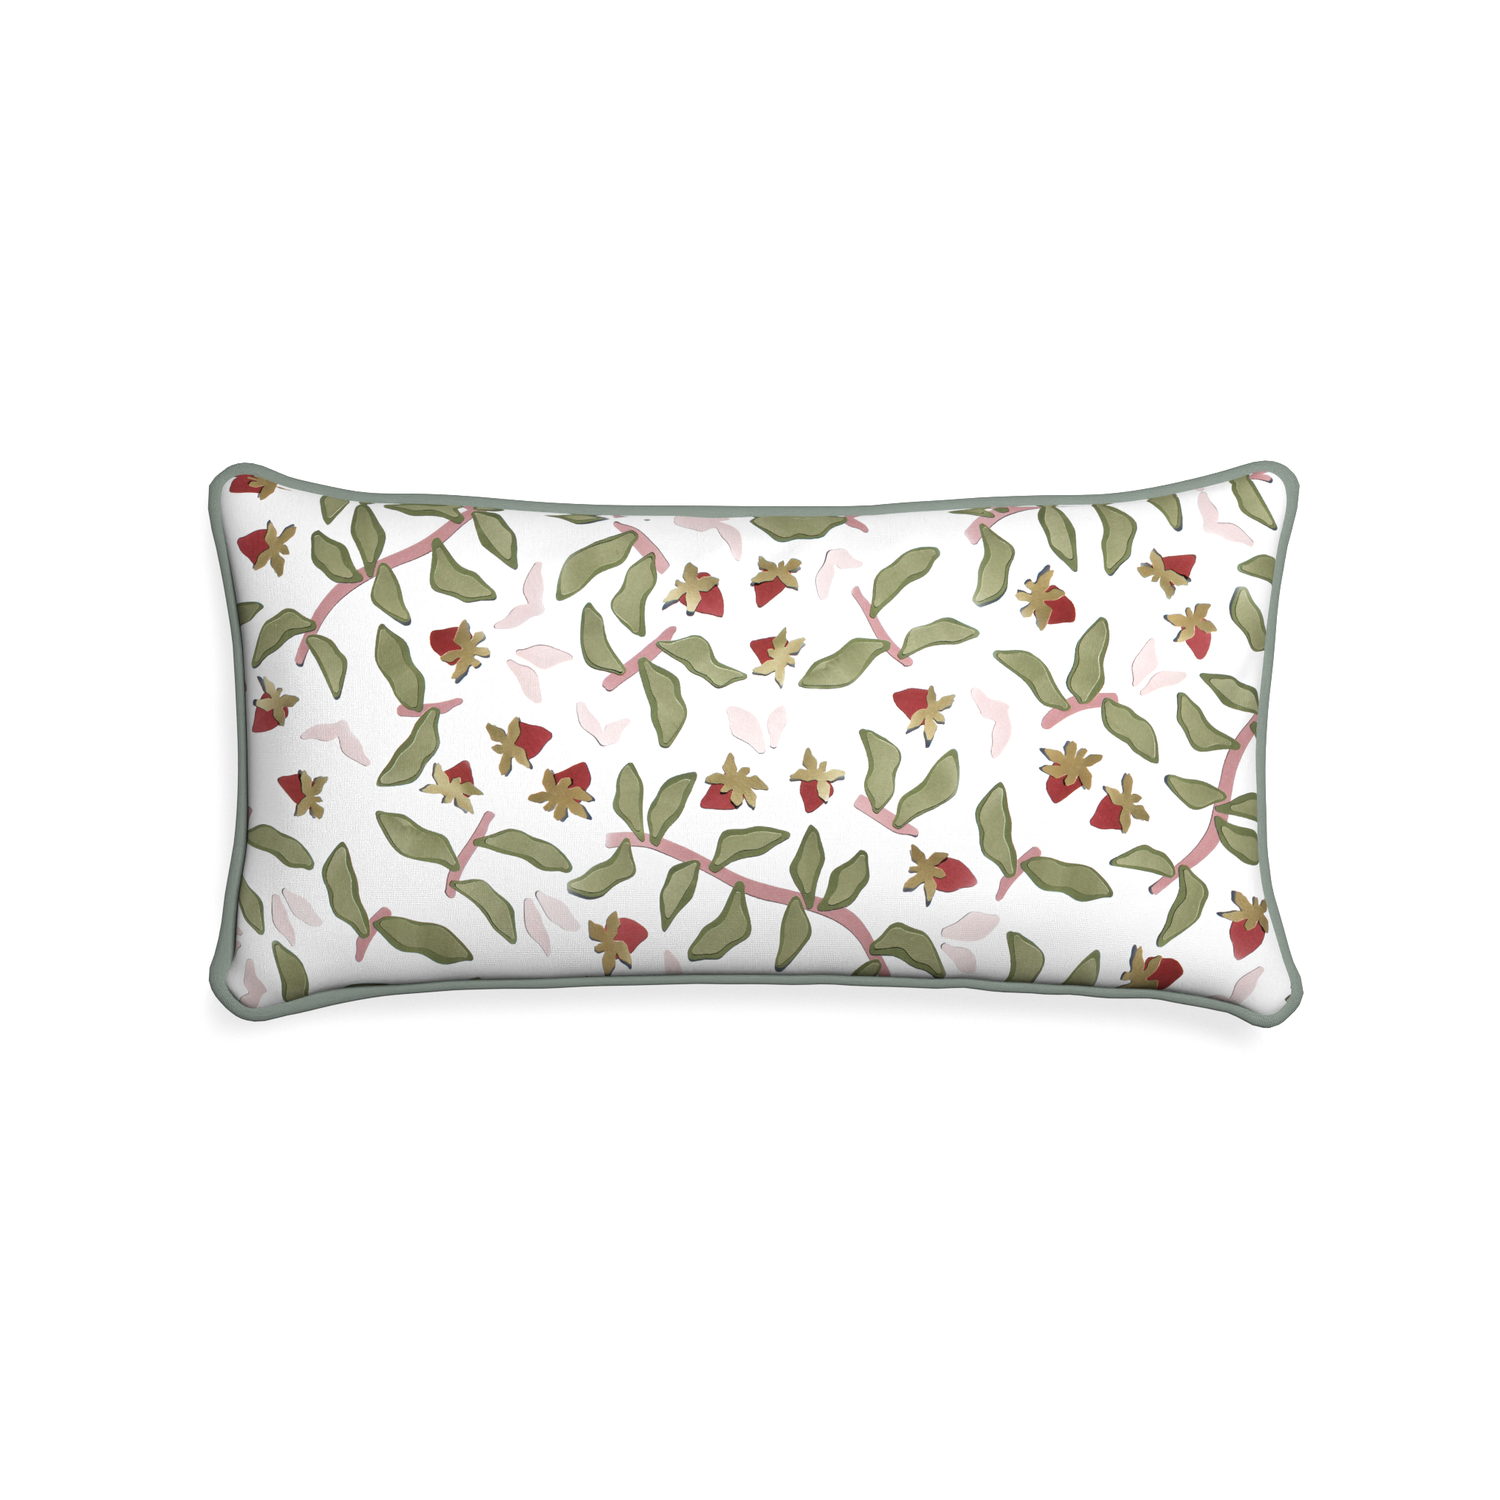 Midi-lumbar nellie custom strawberry & botanicalpillow with sage piping on white background